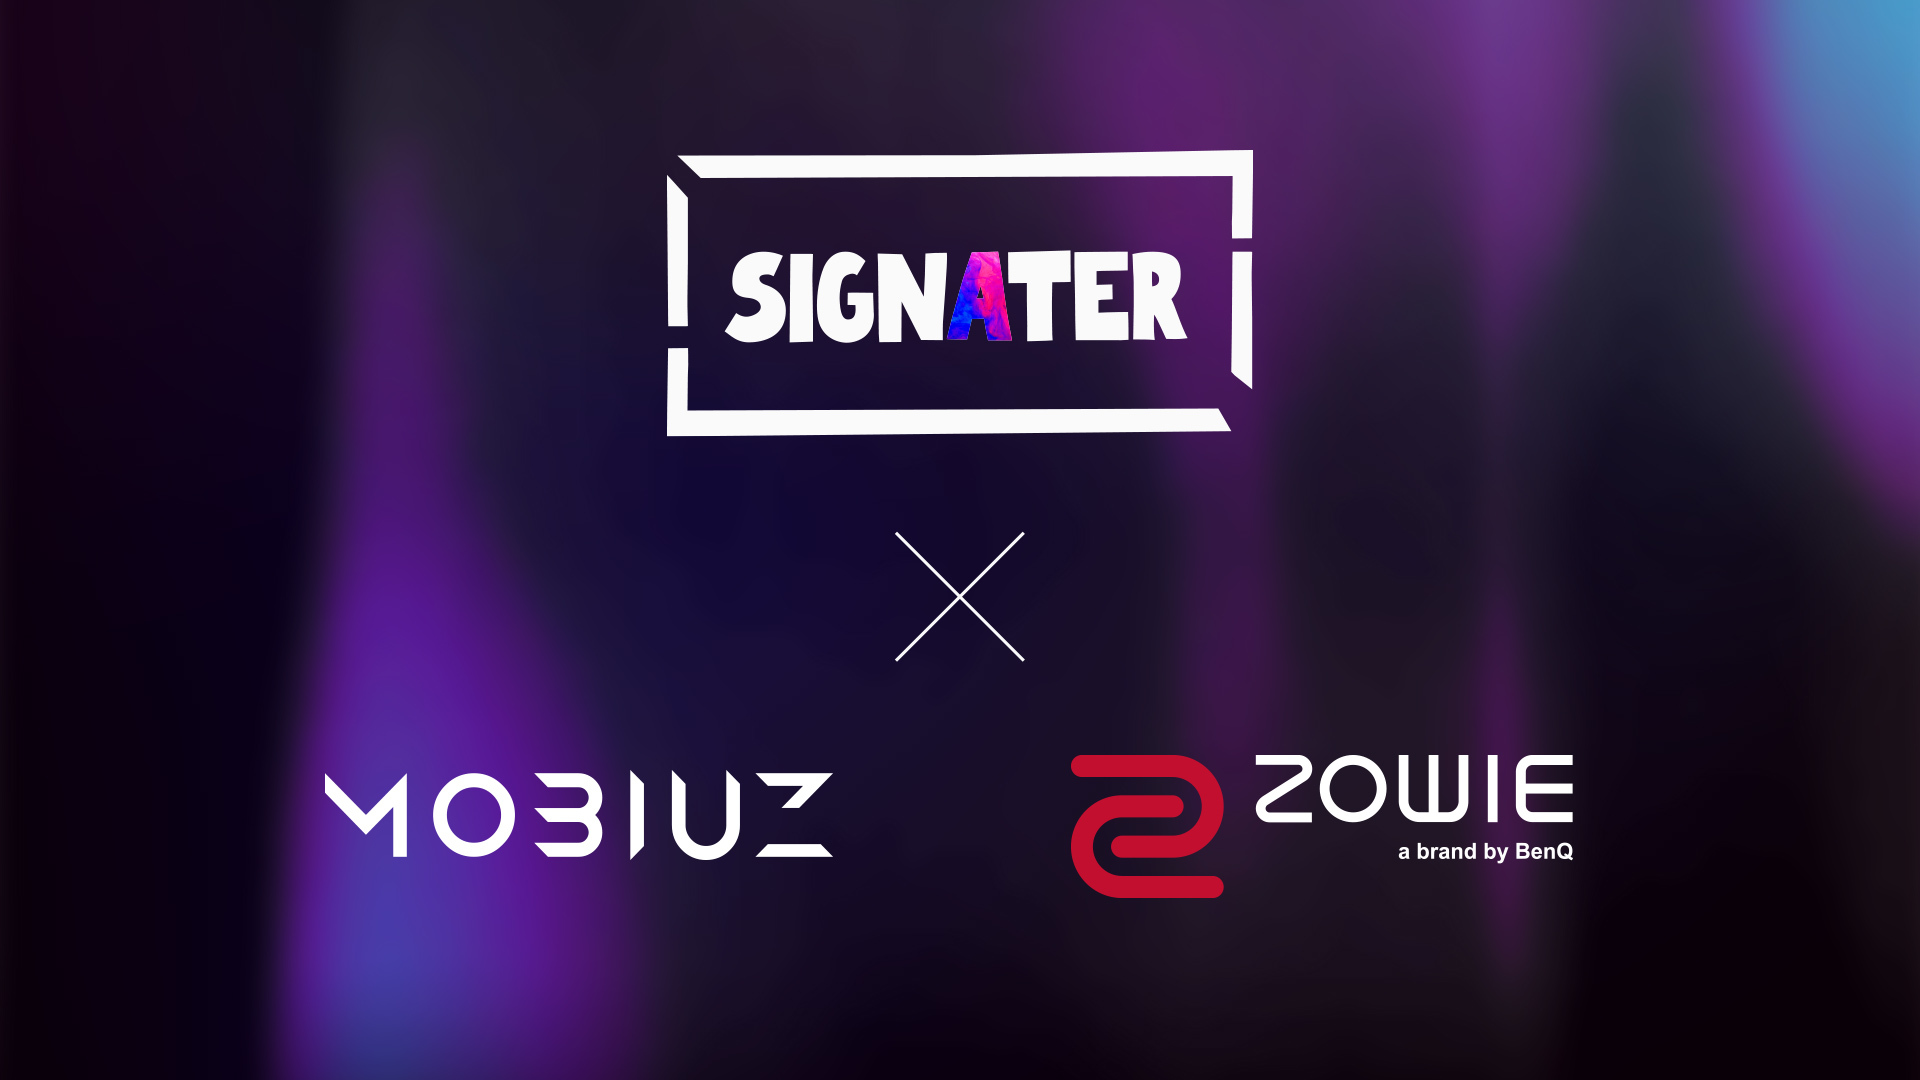 BenQ「MOBIUZ」「ZOWIE」ブランドが
メディアプロジェクト「Signater」とスポンサー契約を締結　
～ ゲームの魅力や楽しみ方を広く発信し、
メインストリームに押し上げる活動を支援 ～